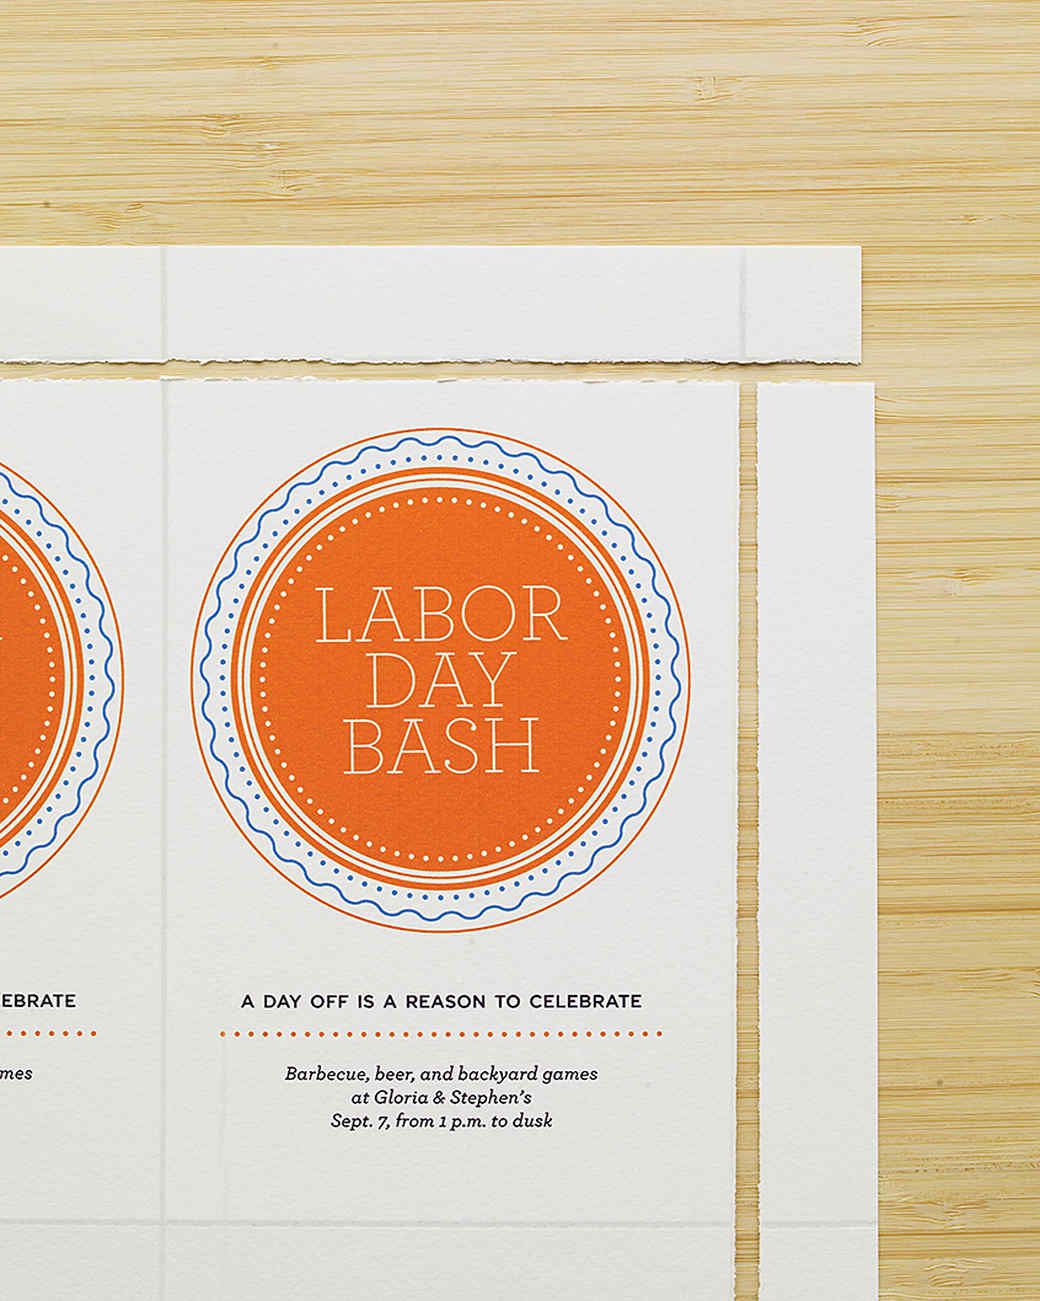 paper labor day invitations with an orange design